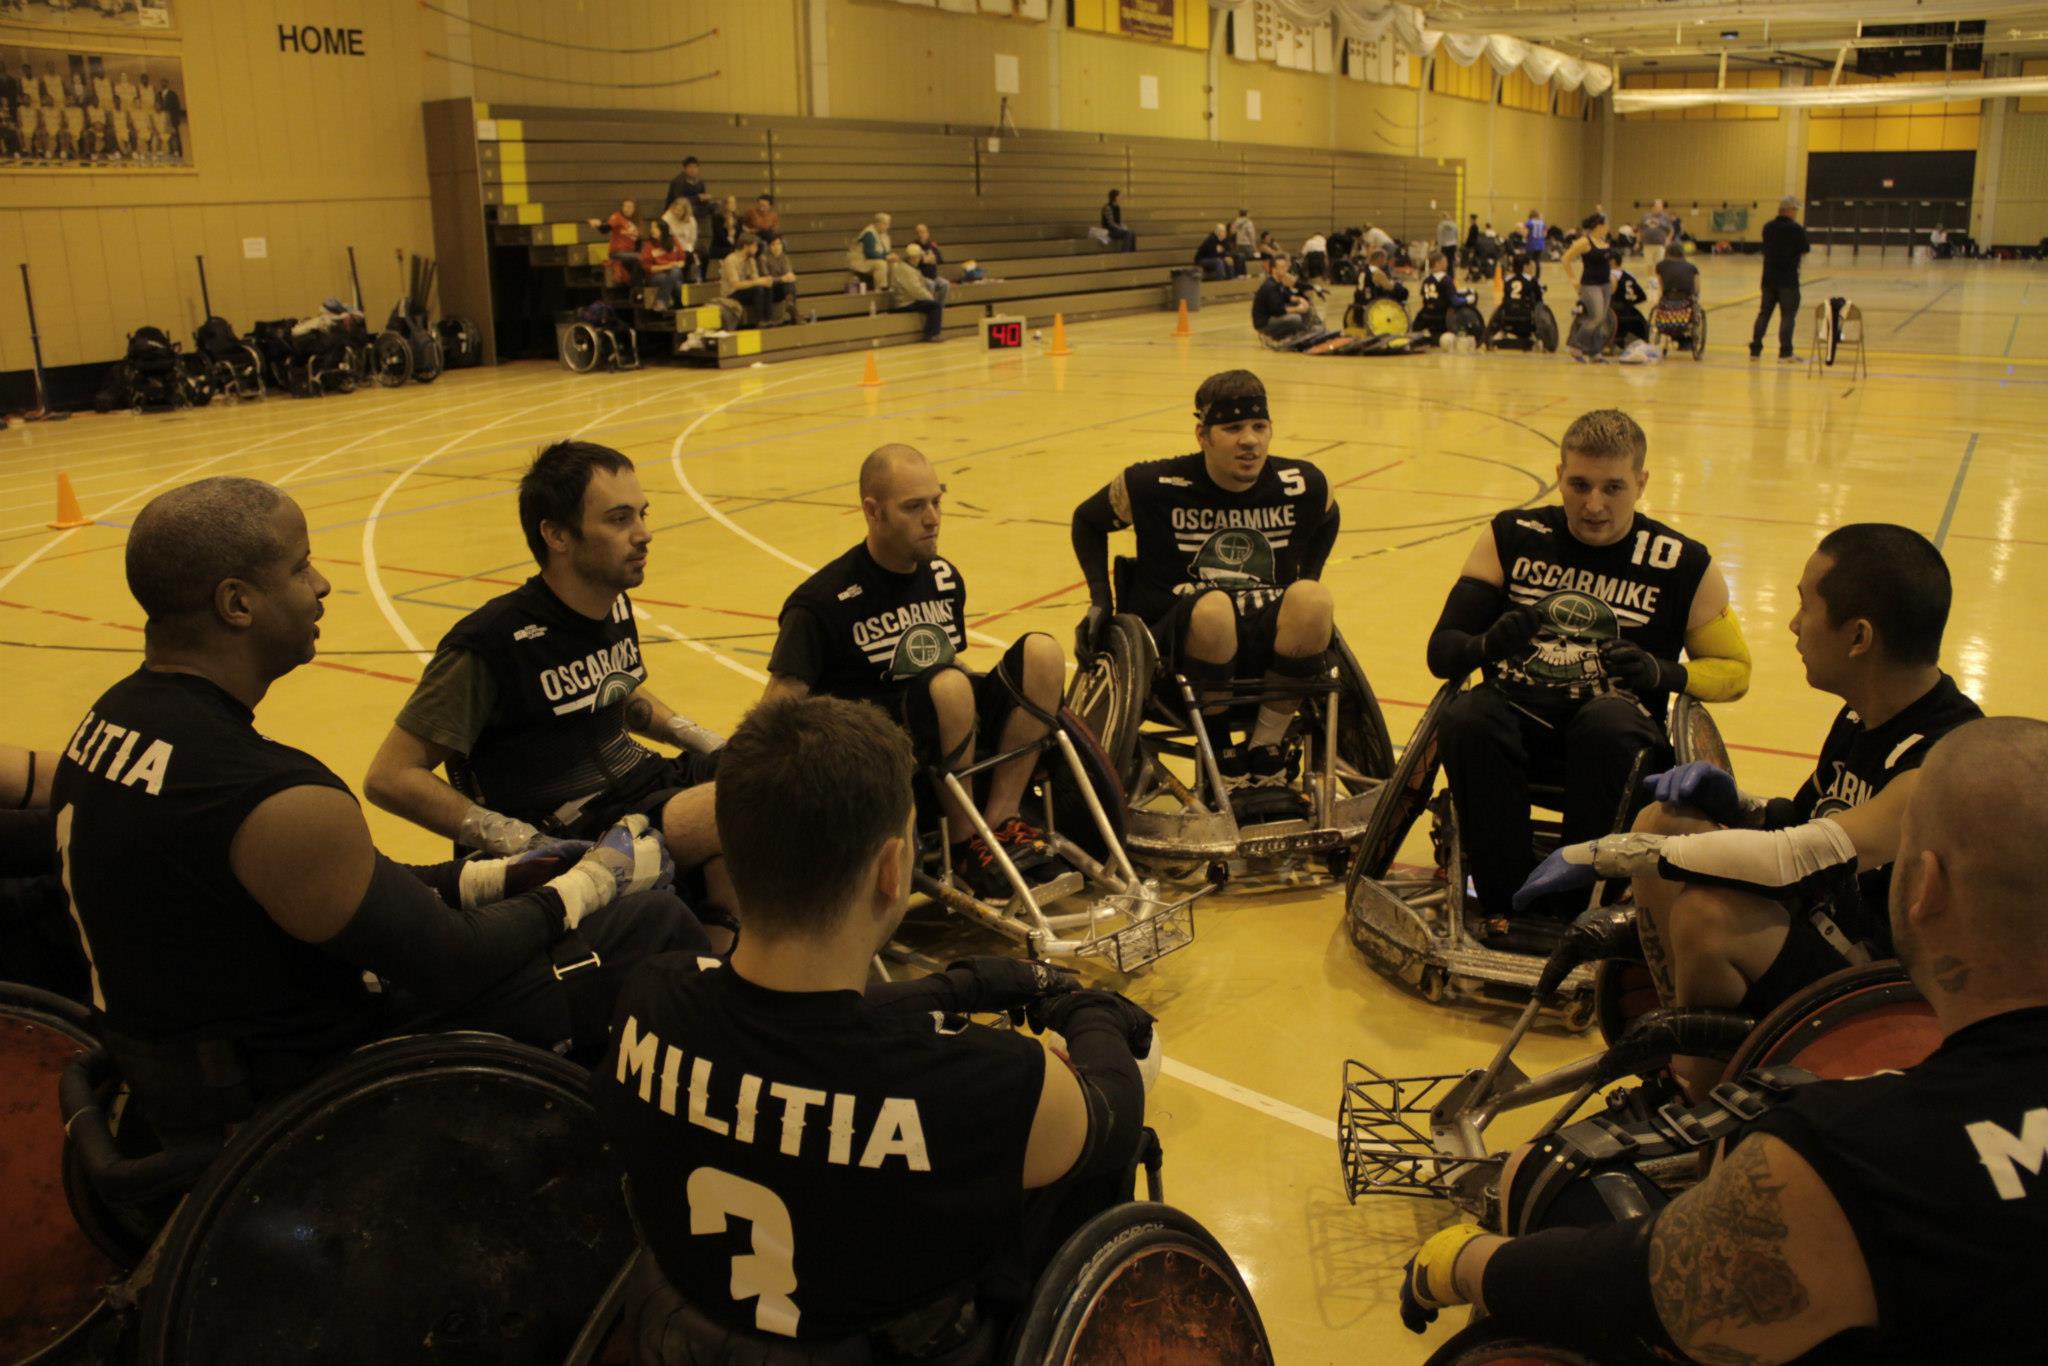 Several OscarMike wheelchair basketball players in a circle huddle on a basketball court